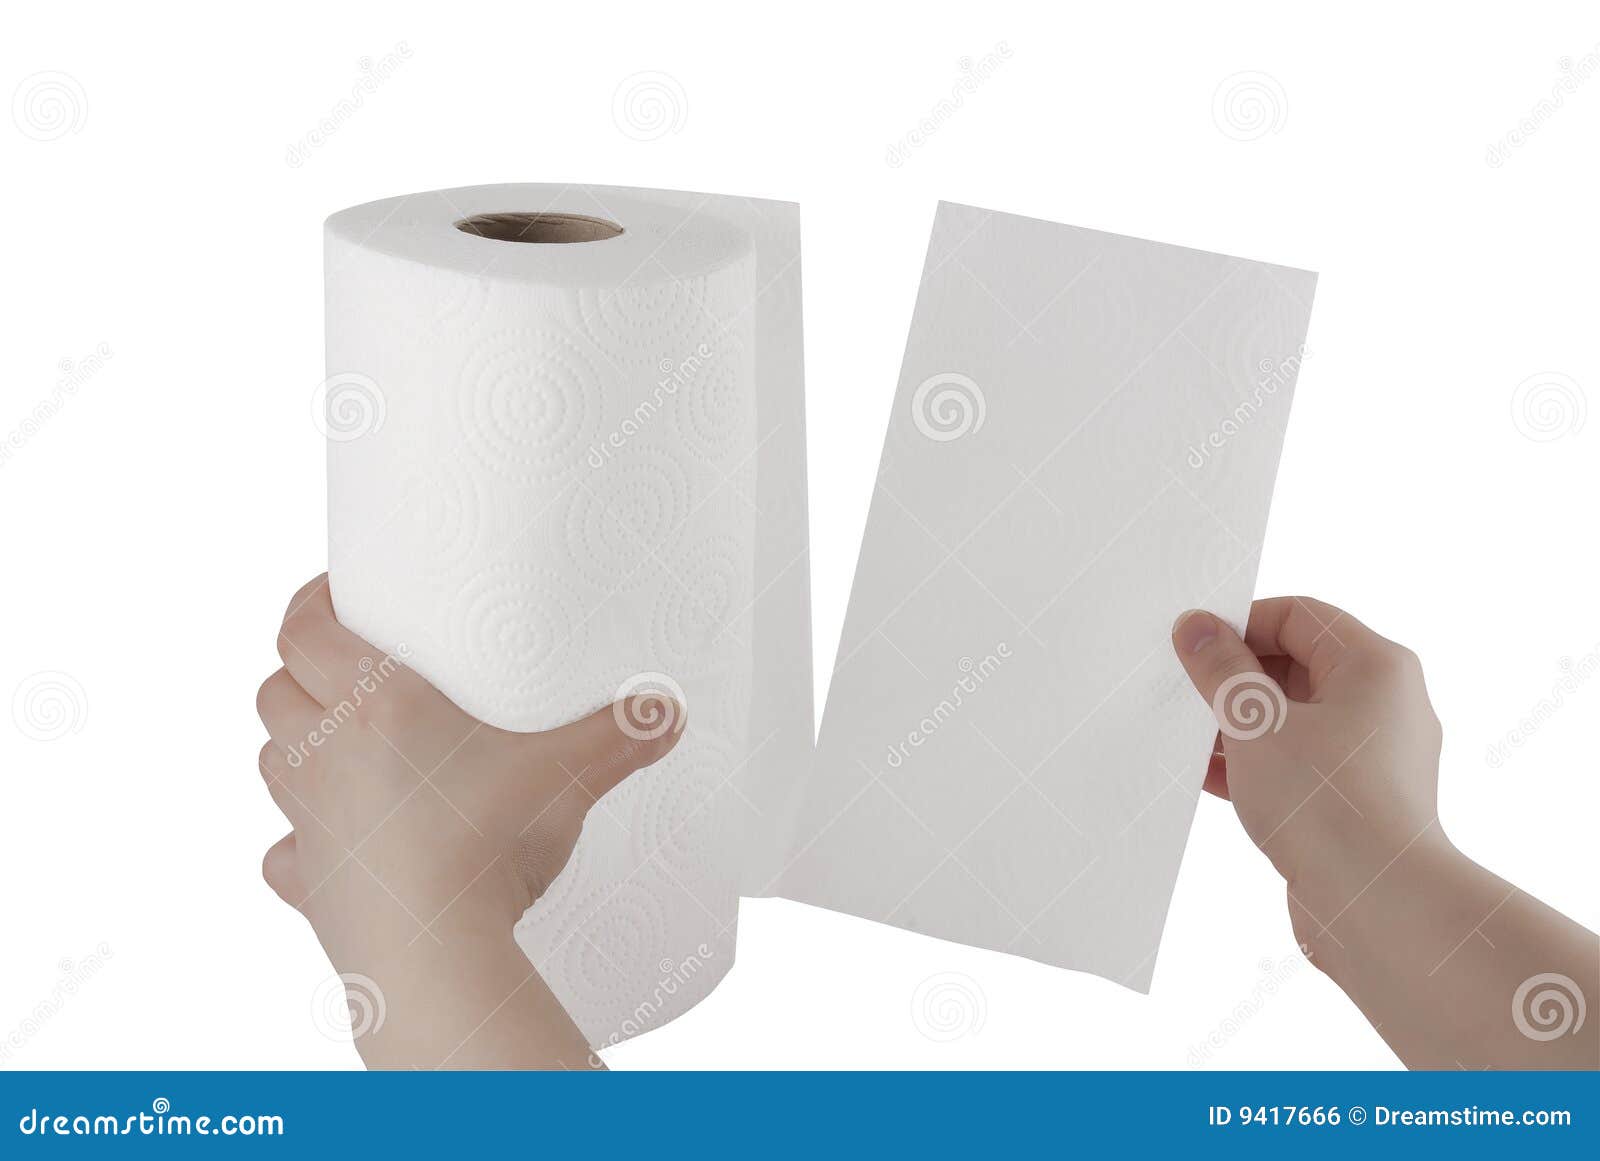 clipart paper towels - photo #42